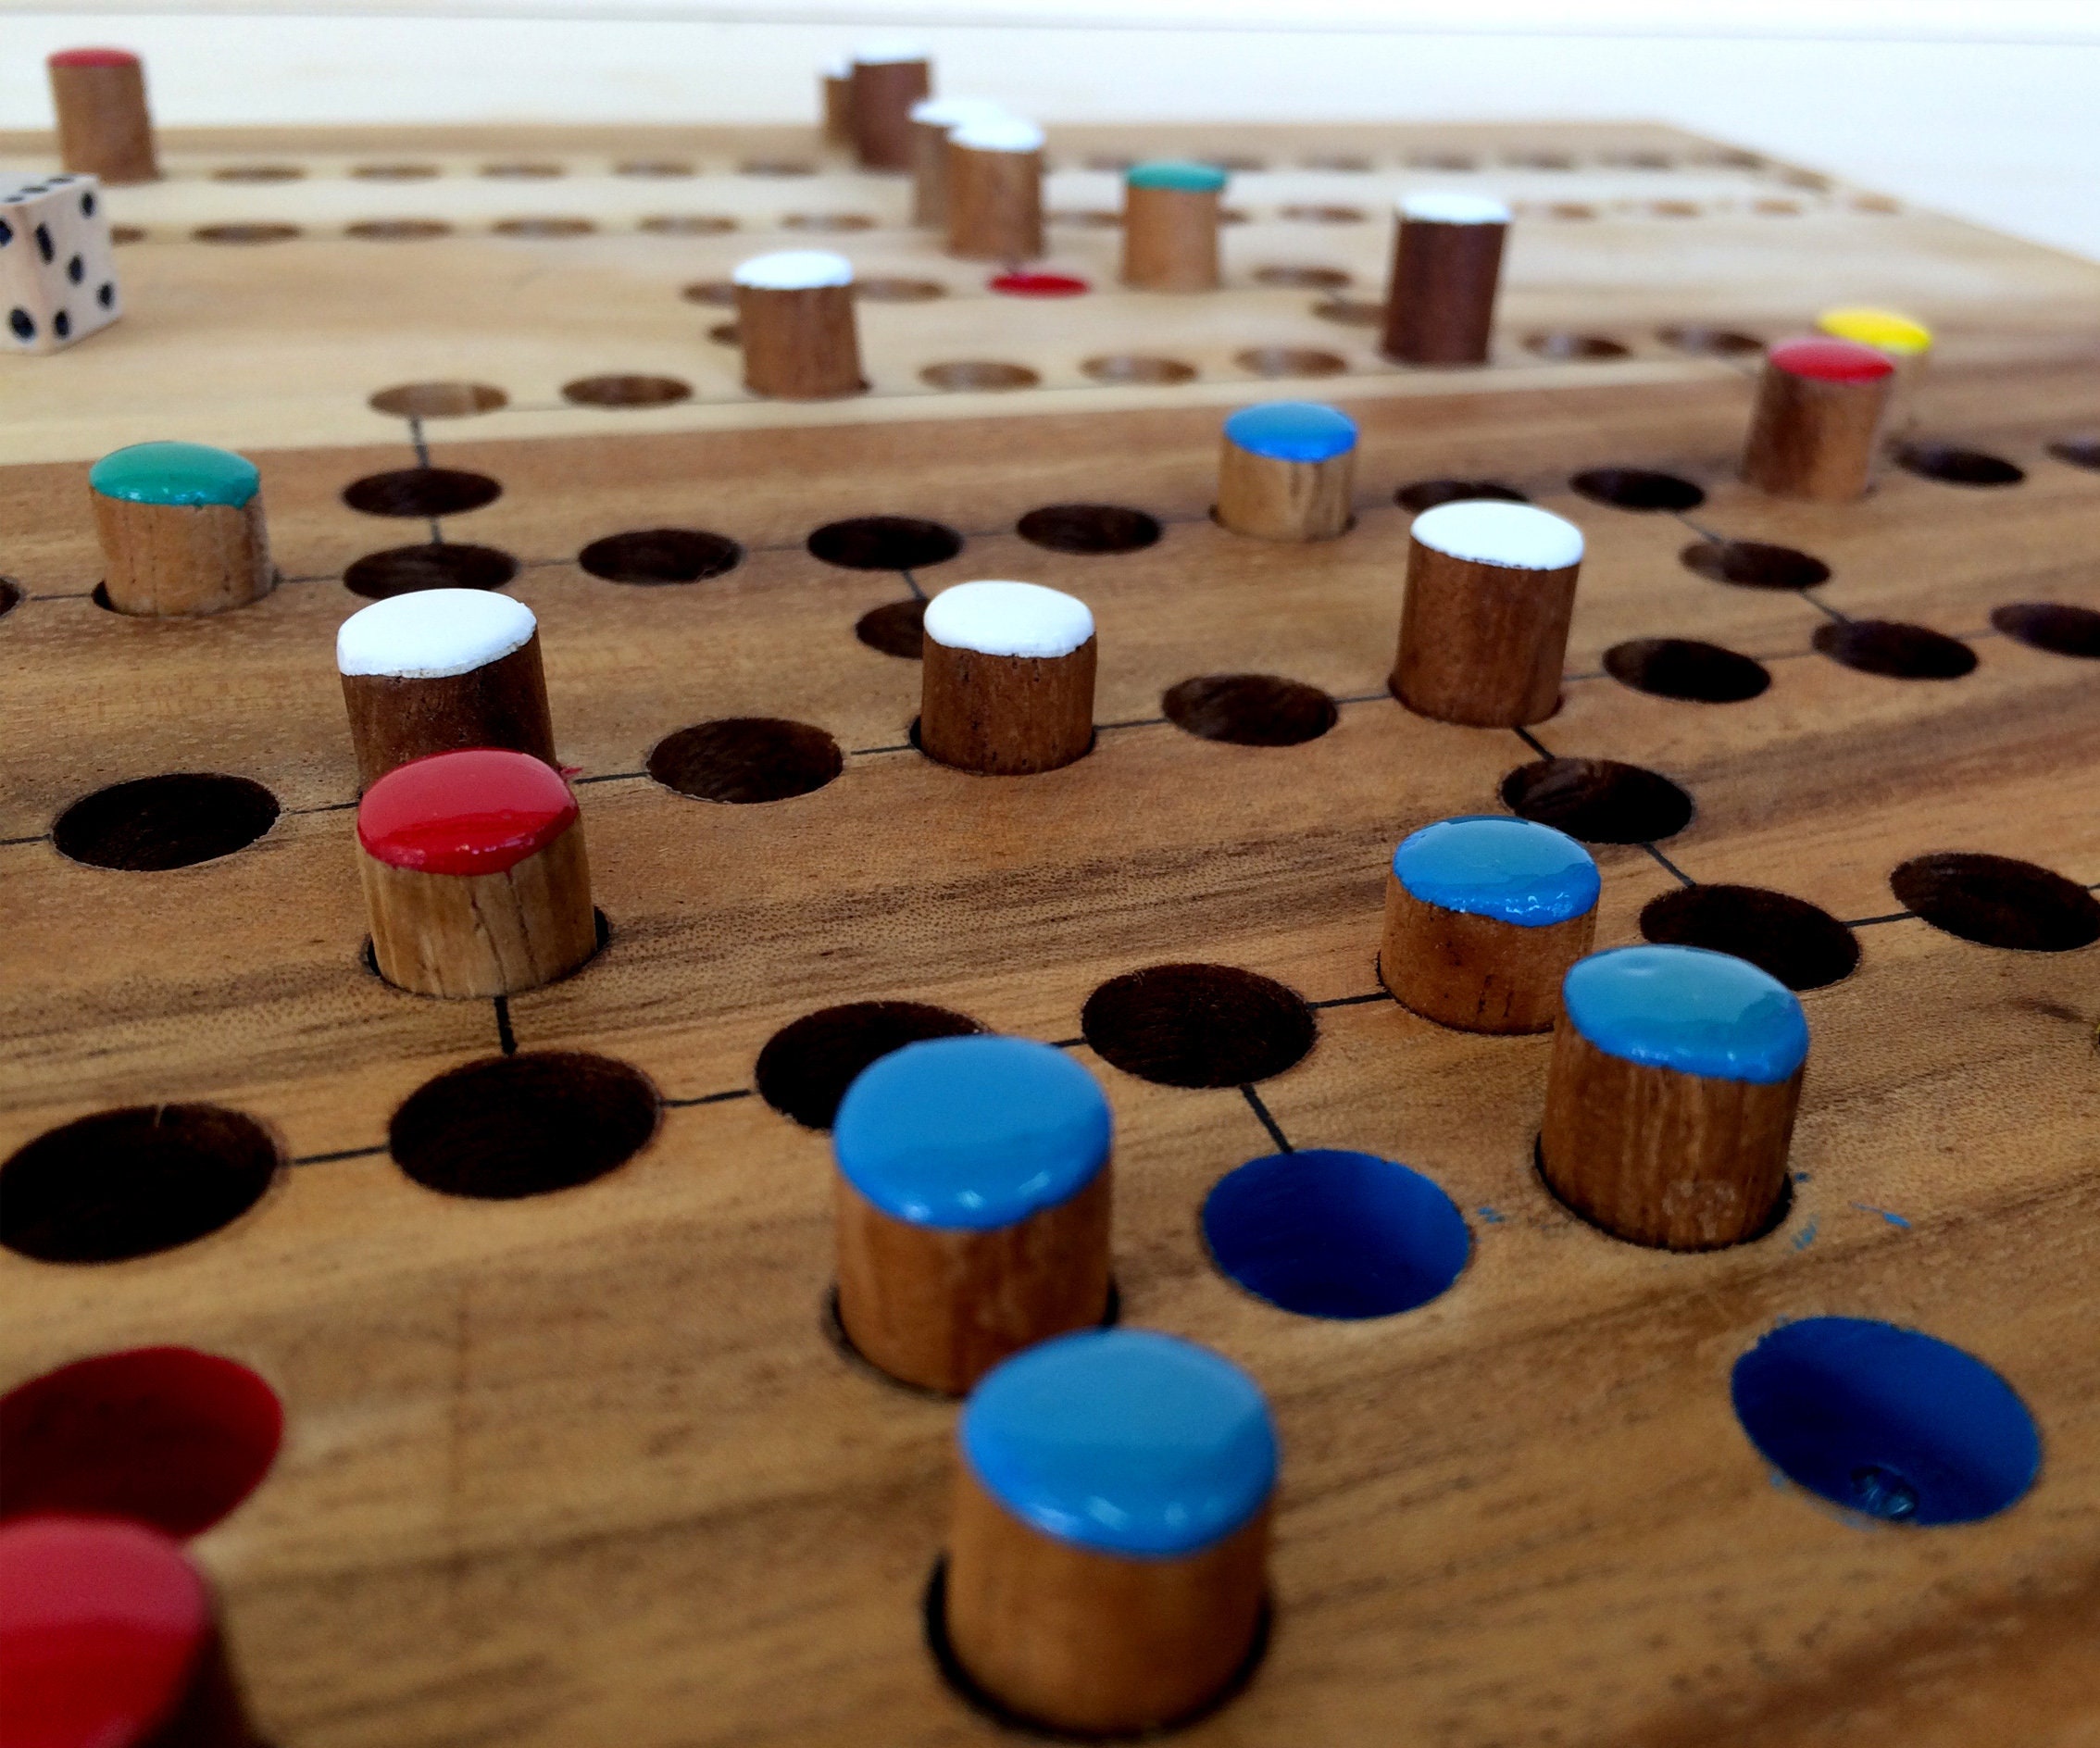 MaleFiz Barricade Board Games for Kids 4-6 Wooden Chess Kids Board